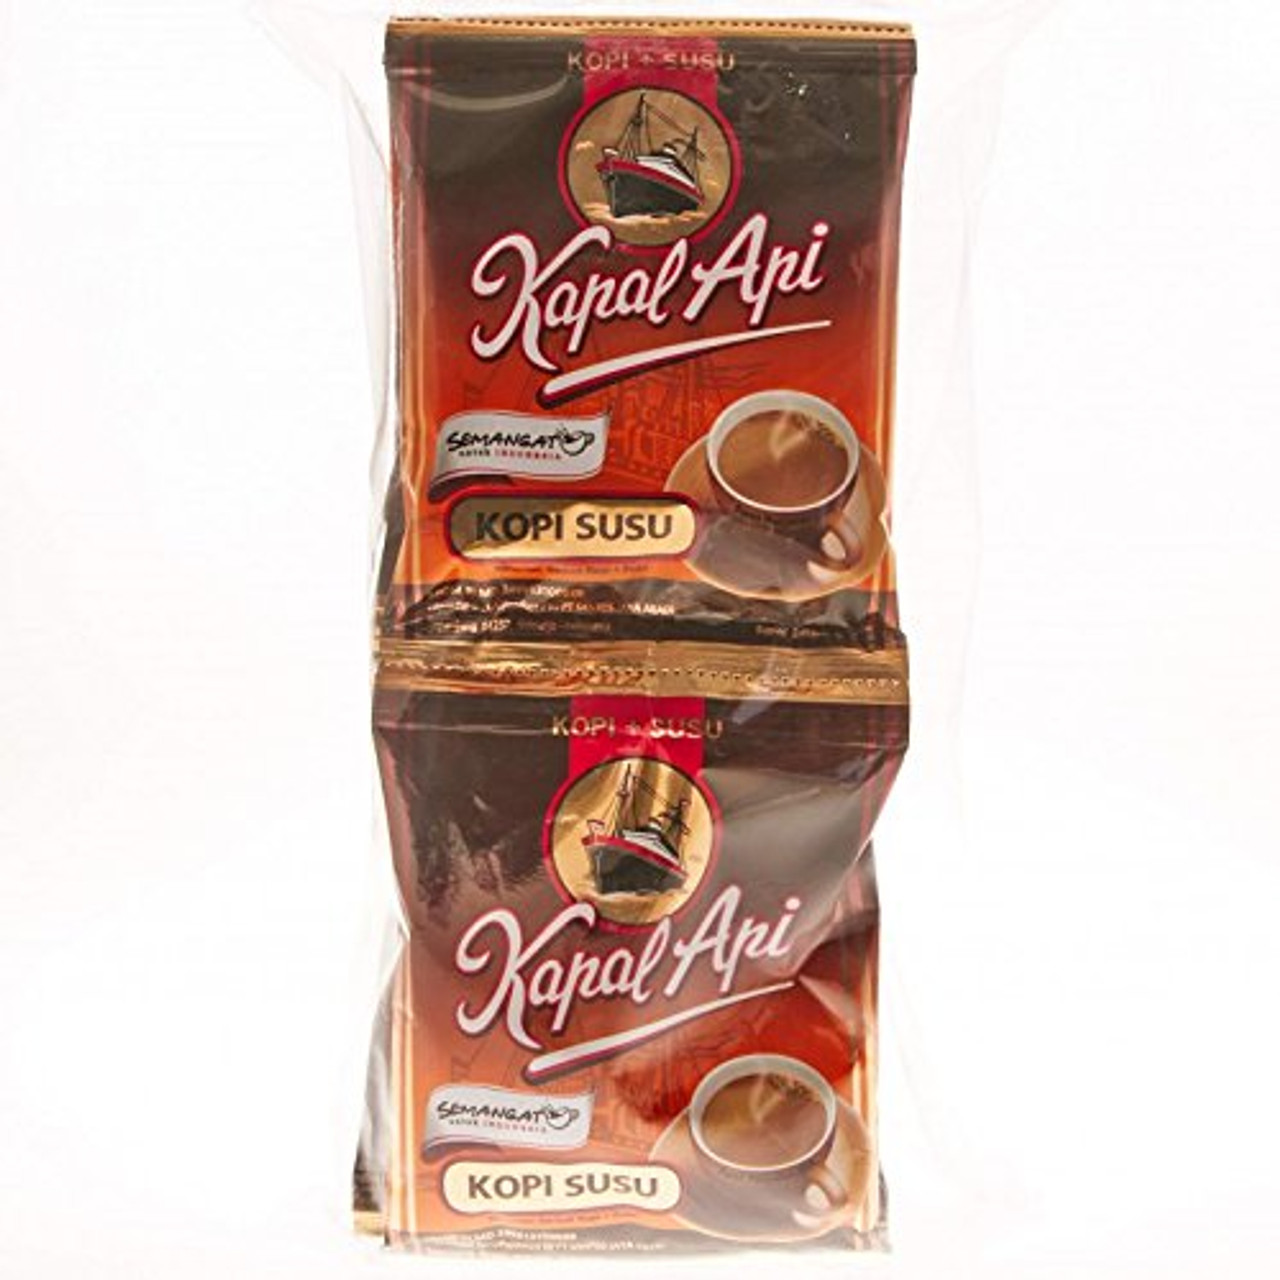 Kapal Api Kopi Susu Instant Coffee, 1.0 Oz (Pack of 10)